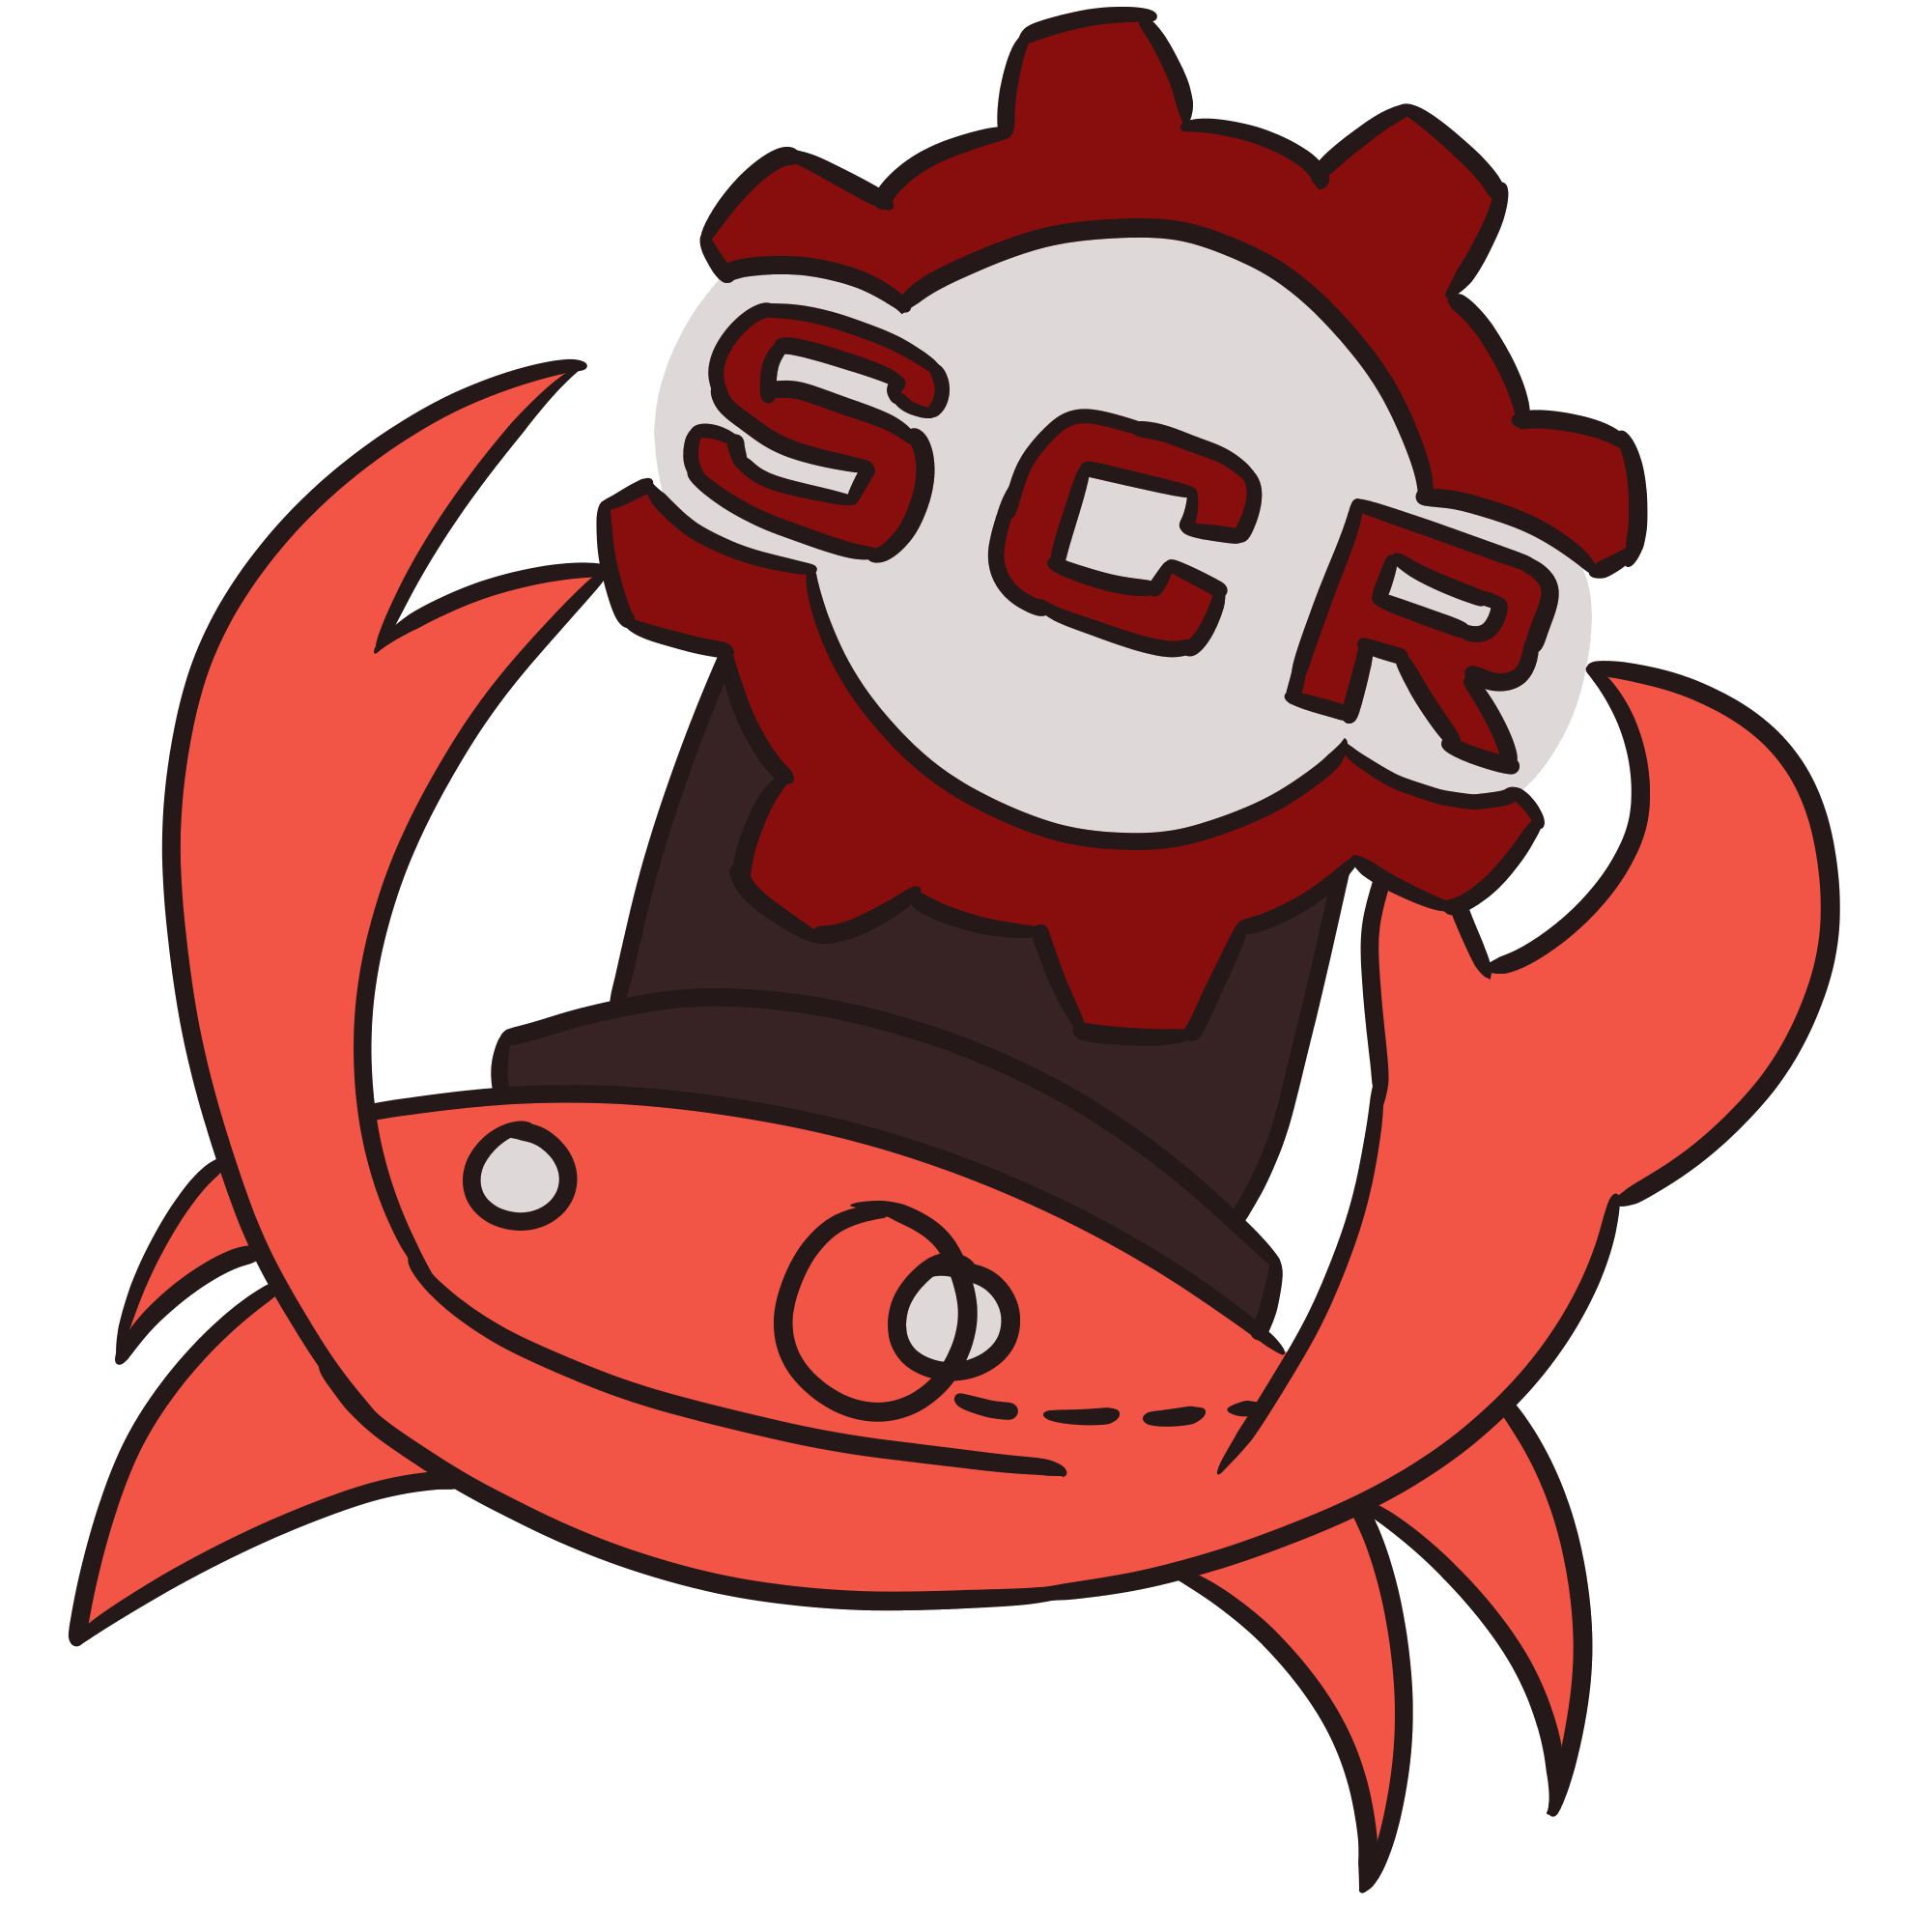 Scrabby holding the SCR logo